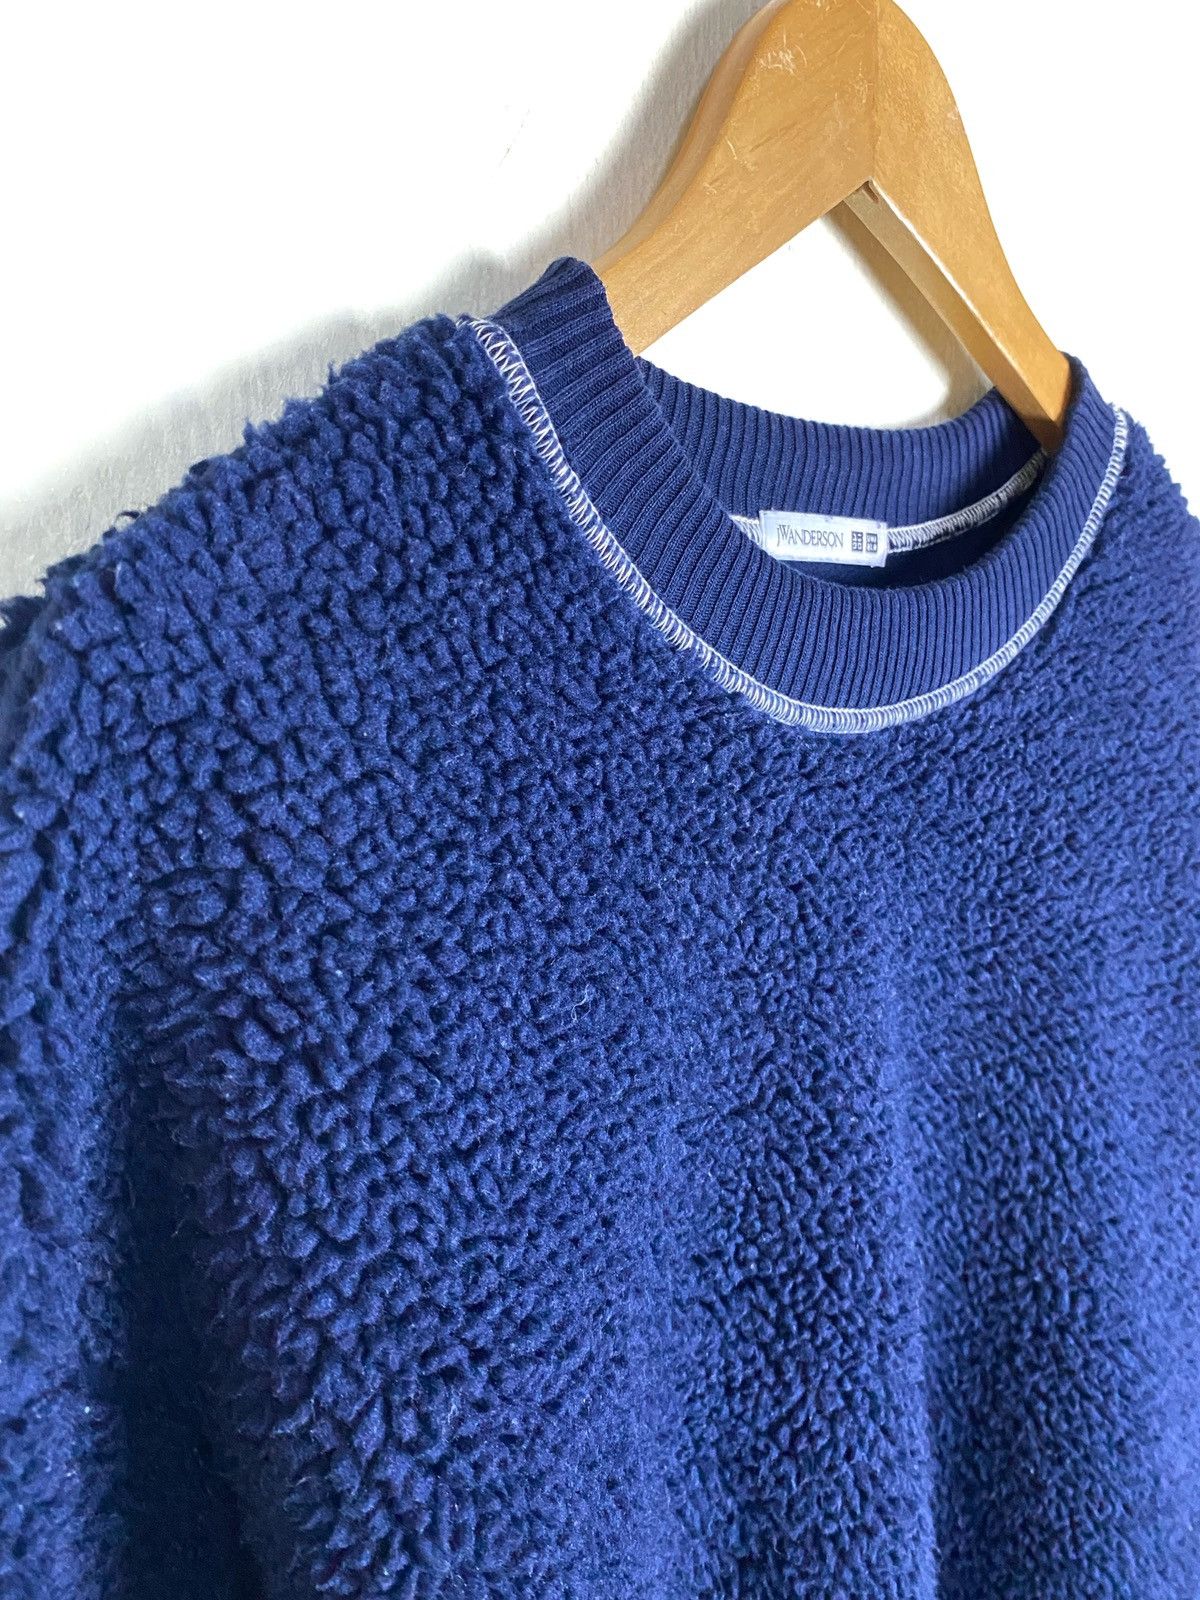 Uniqlo - J.W. Anderson Fleece Sweatshirt - 3